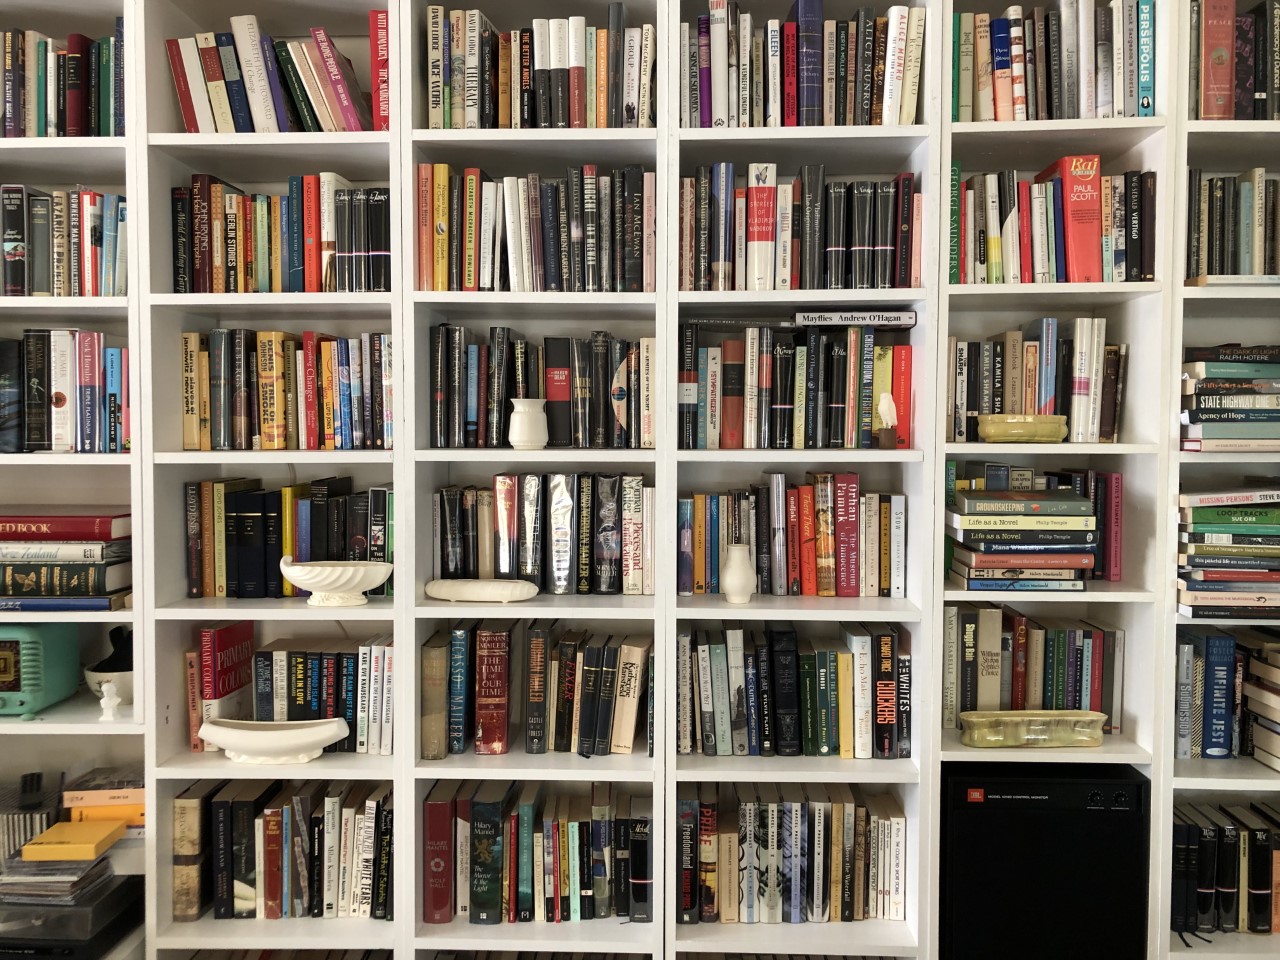 The bookshelf in Paula Morris